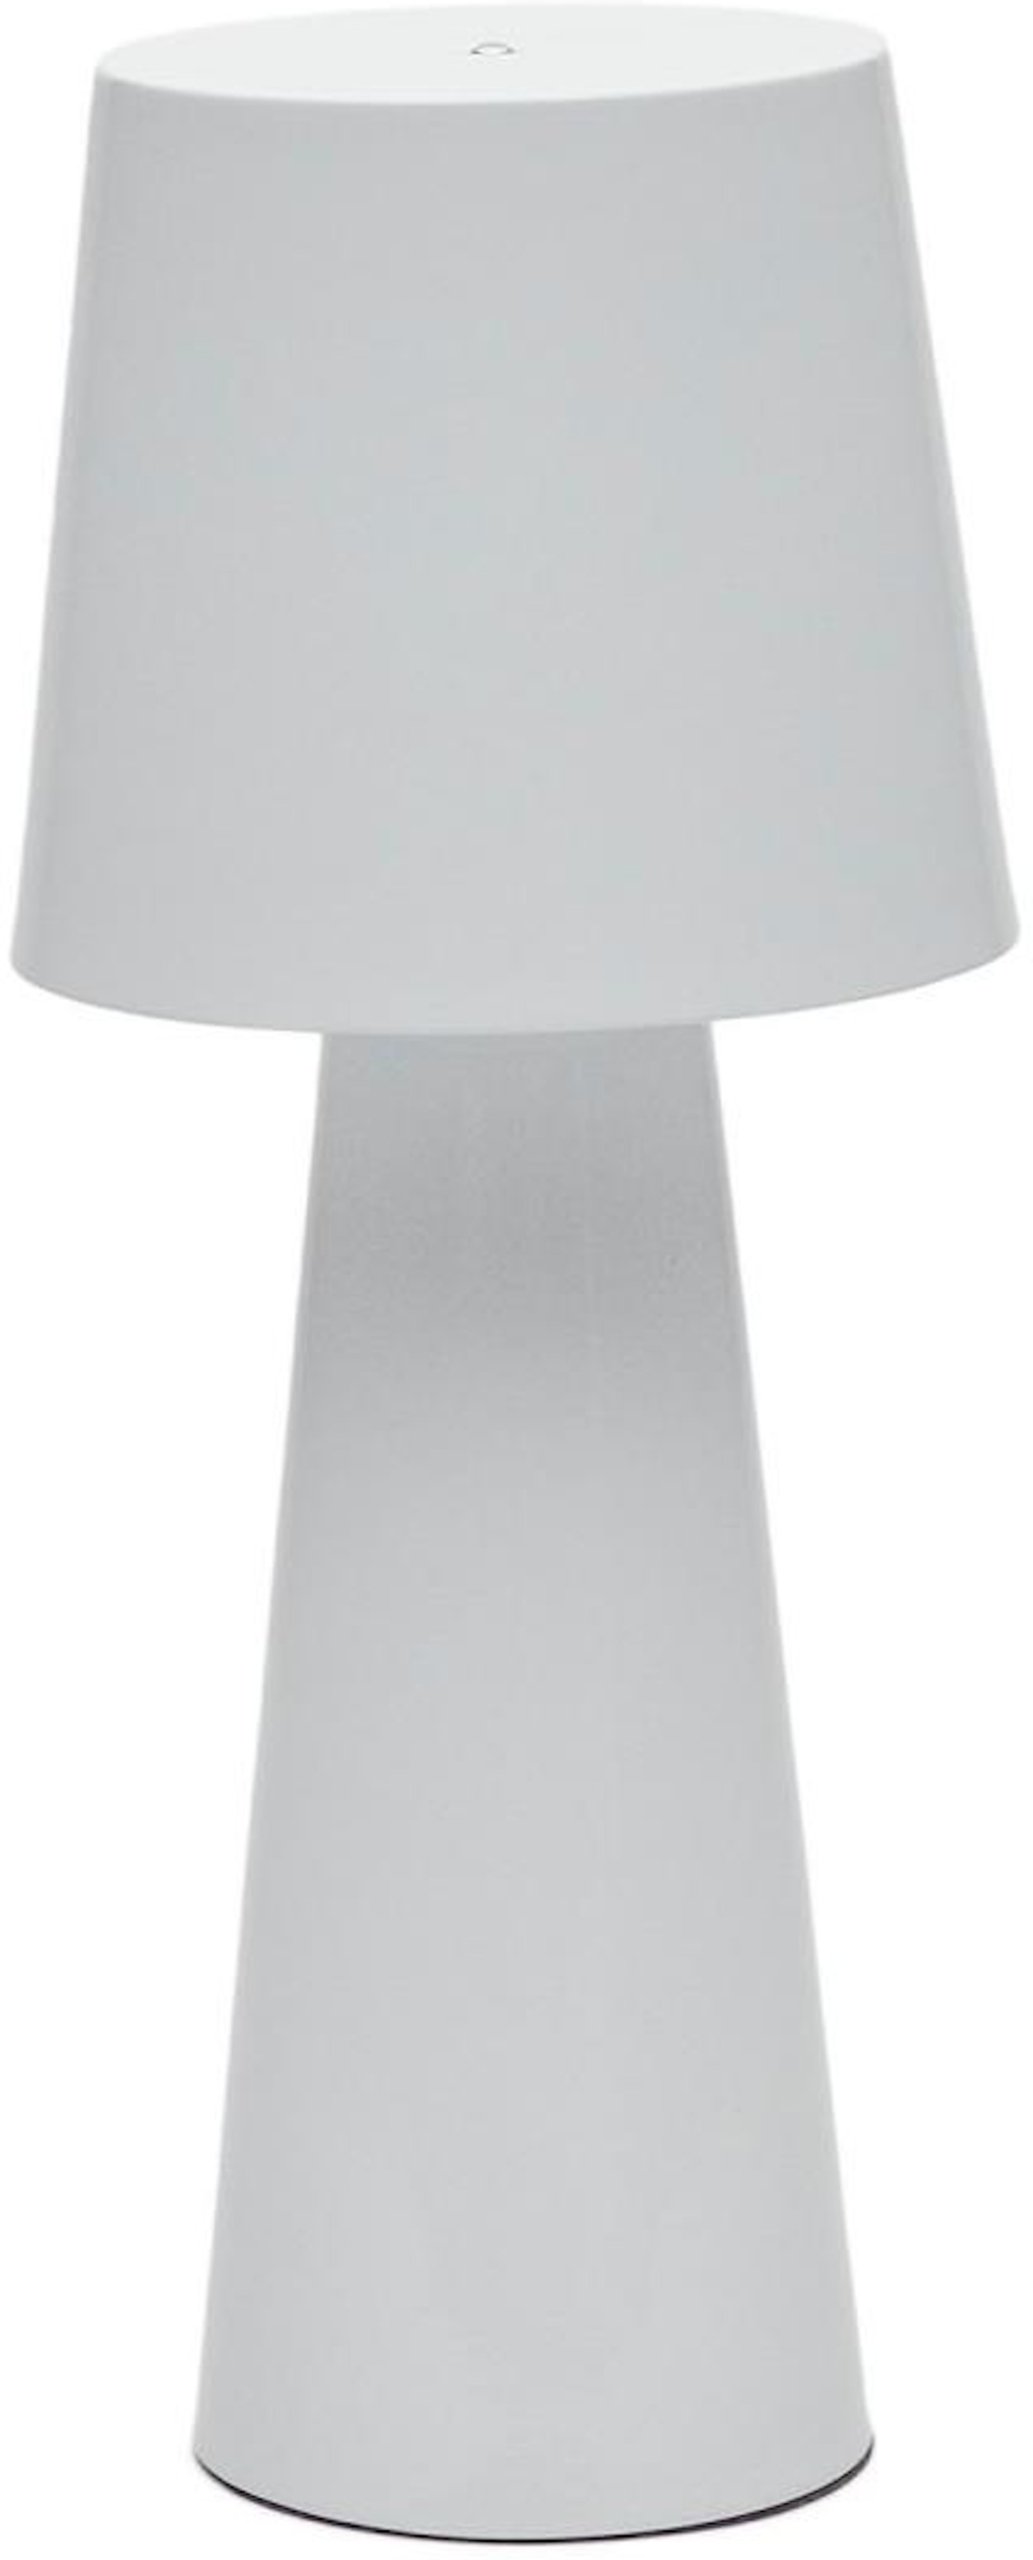 Arenys, Bordlampe, moderne, nordisk, metal by Laforma (H: 40 cm. x B: 16 cm. x L: 16 cm., Hvid)